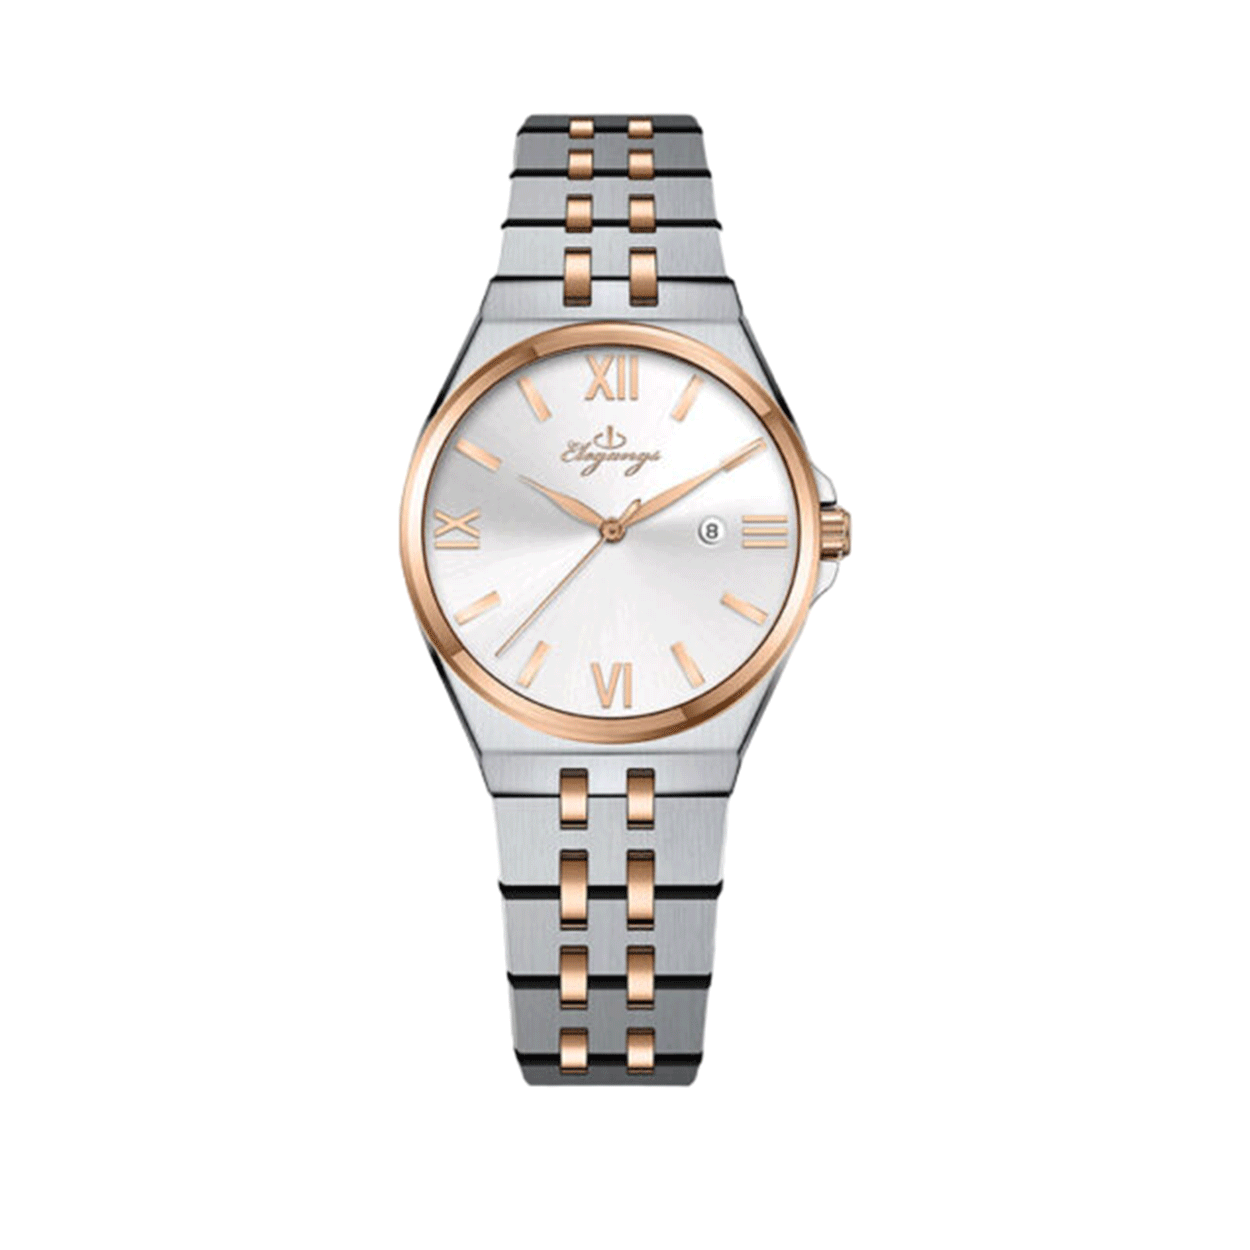 ساعت الگنگس مدل SP8291-109 زنانه